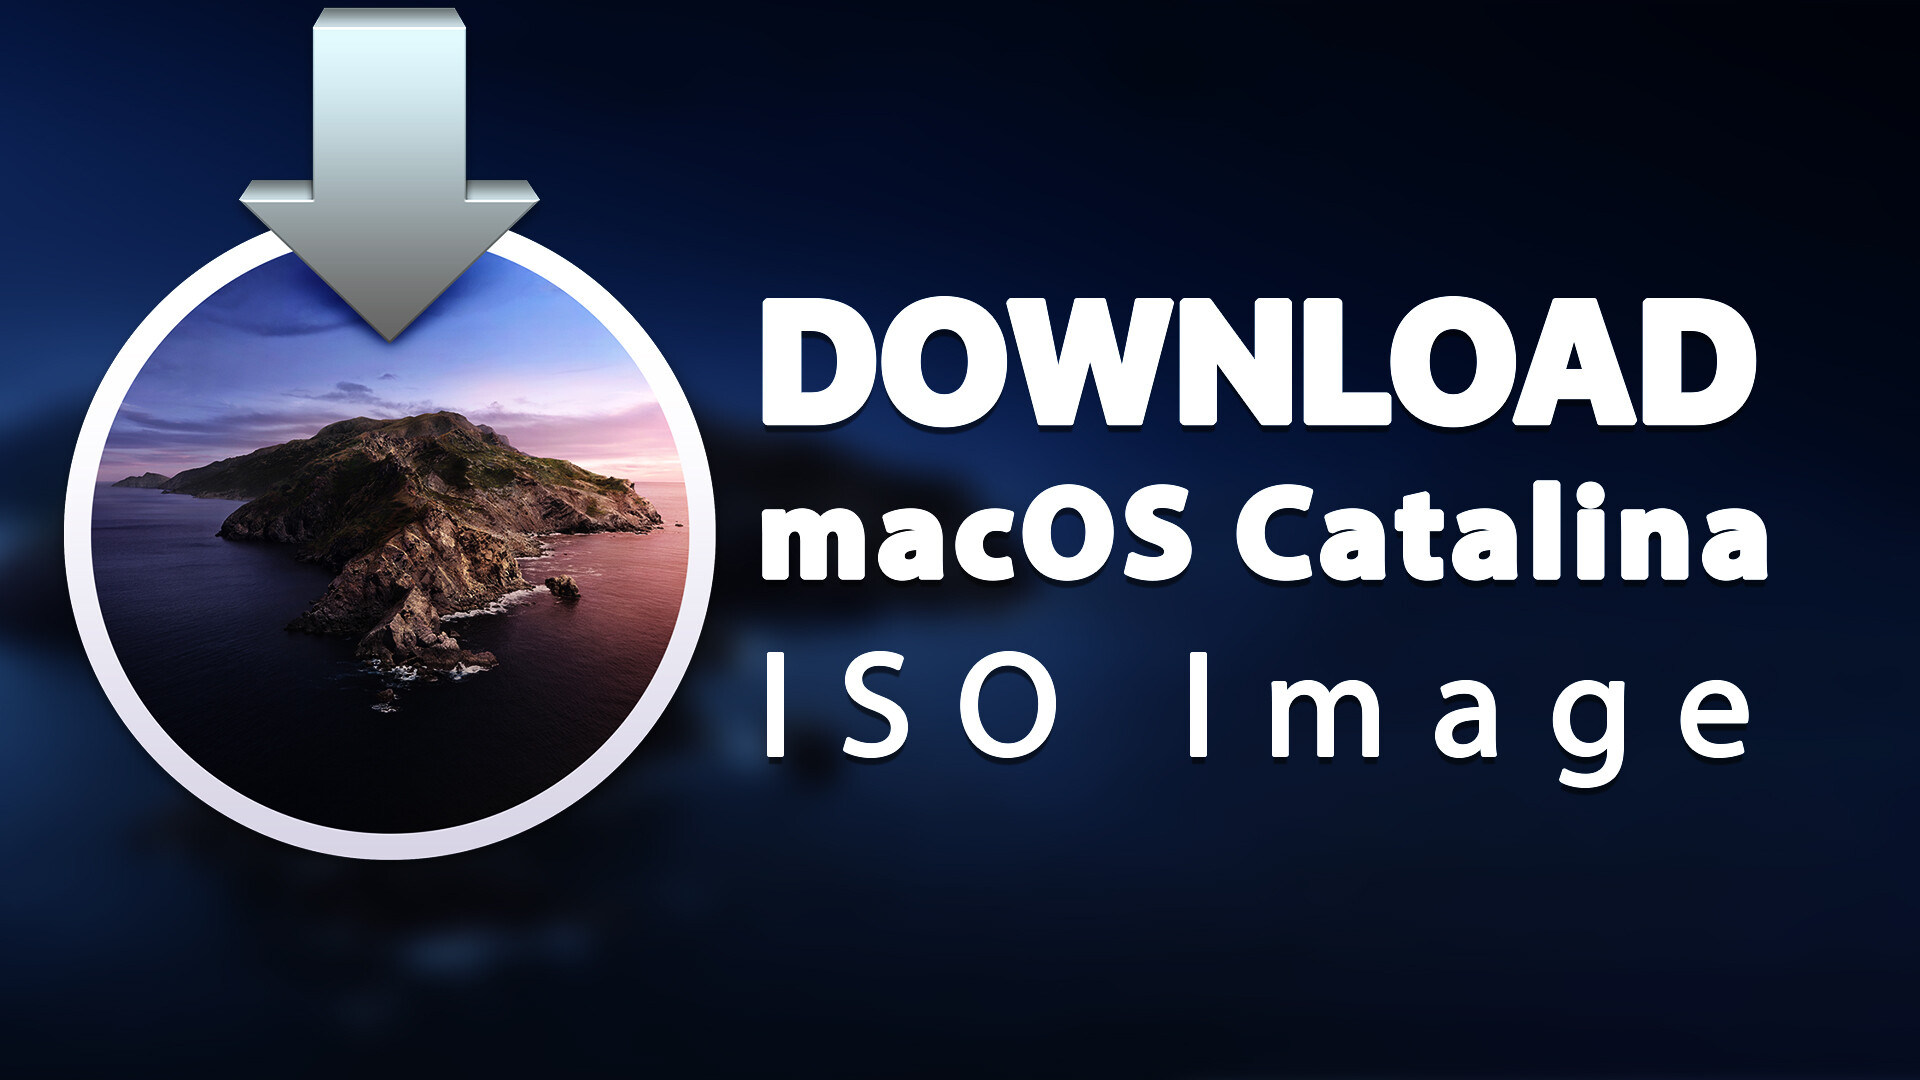 Mac catalina download kuka robot simulation software free download